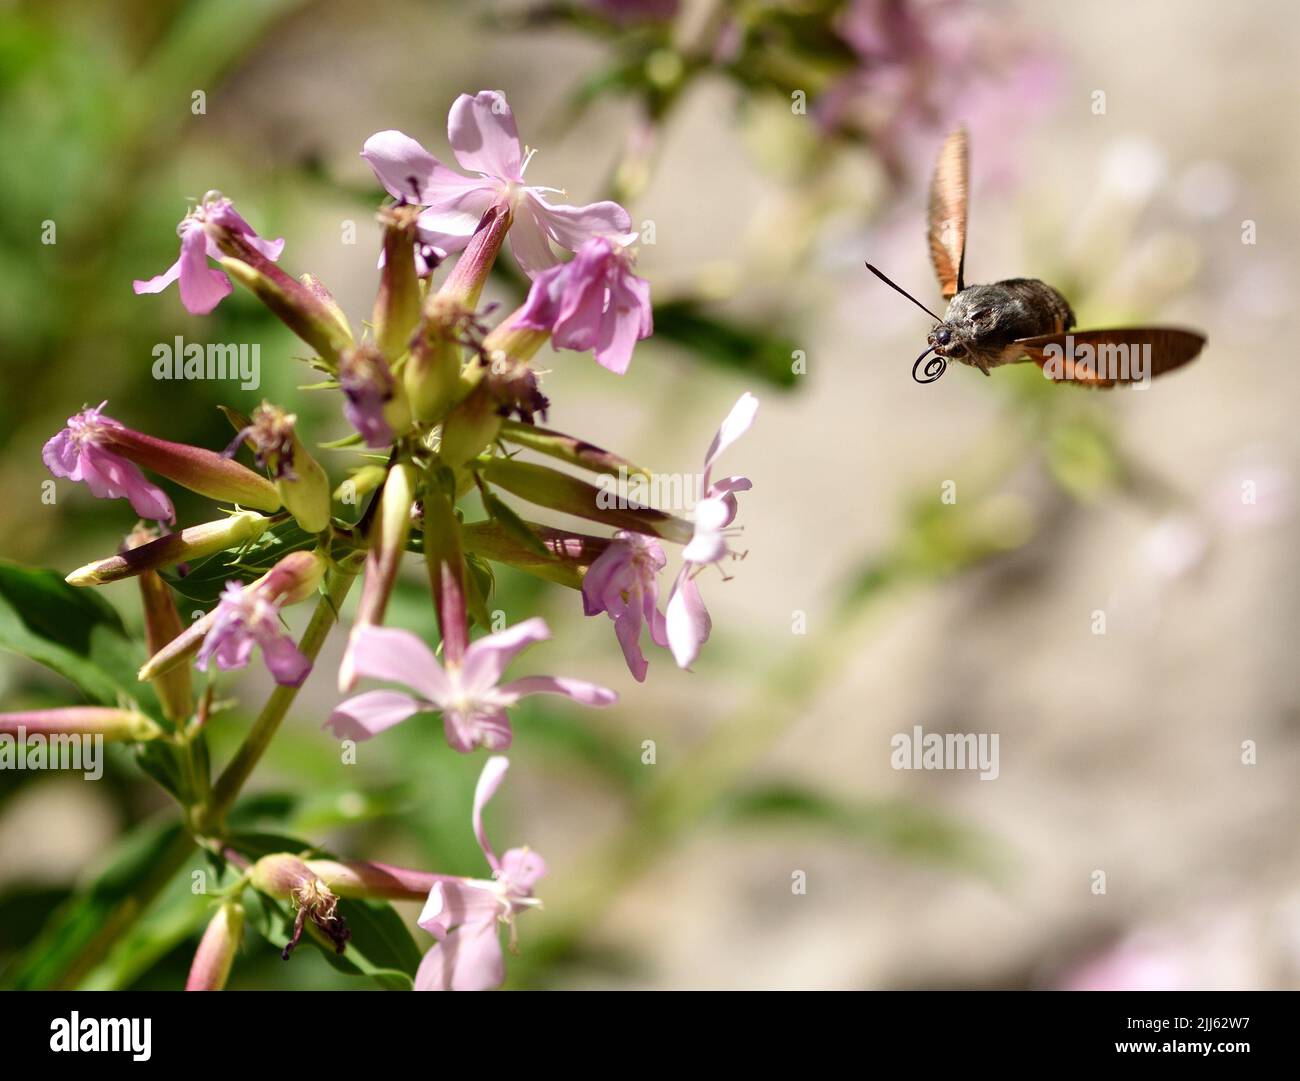 Hummingbird Hawk Moth with curled proboscis. Stock Photo